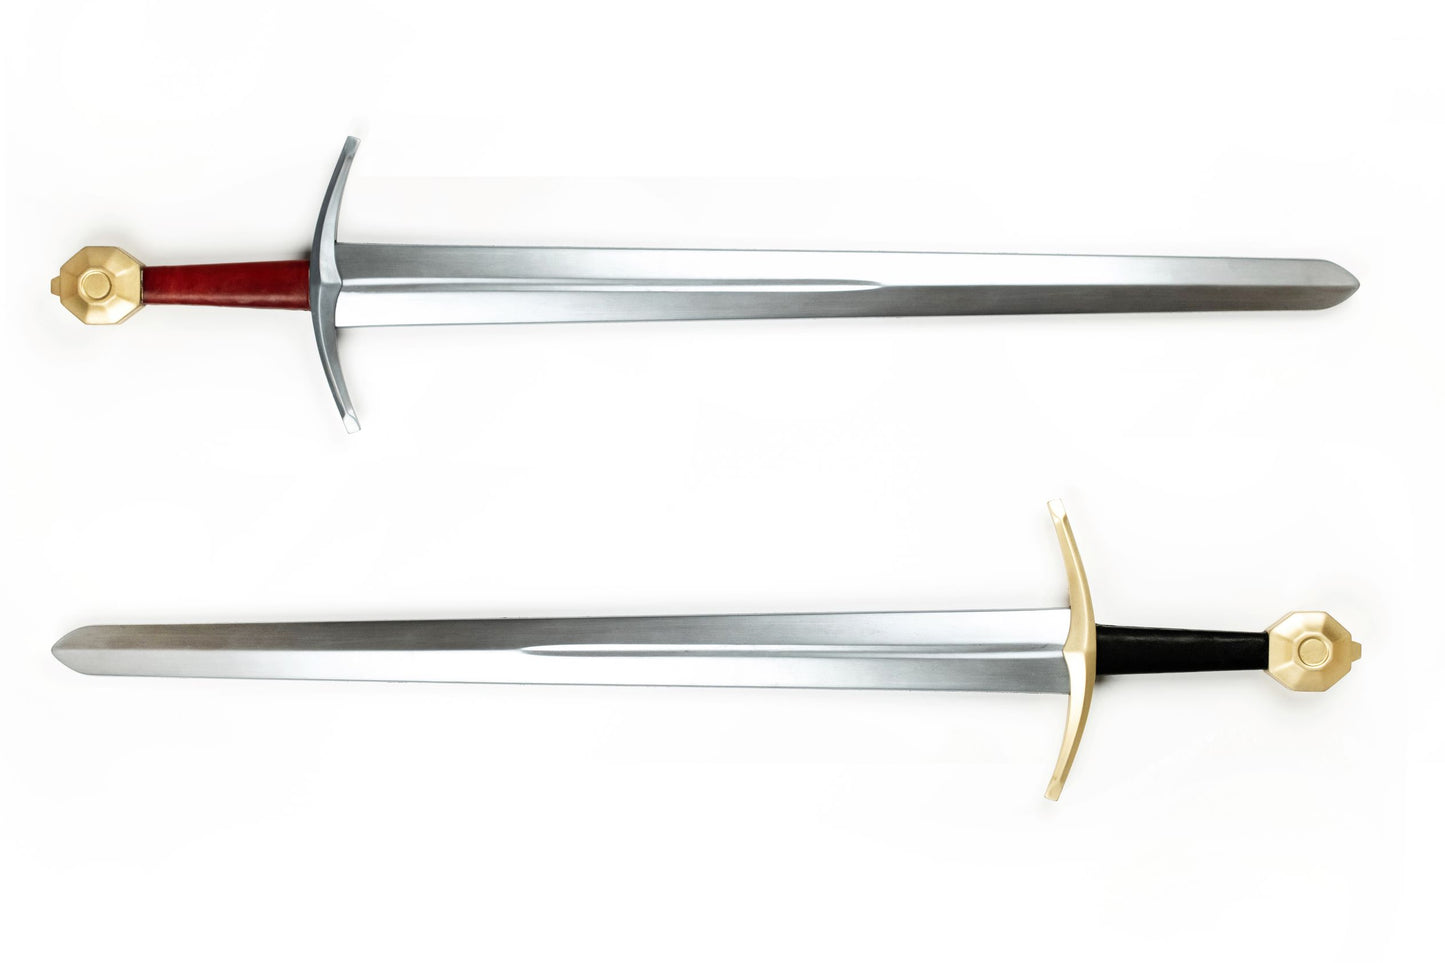 Octagon - one-handed sword